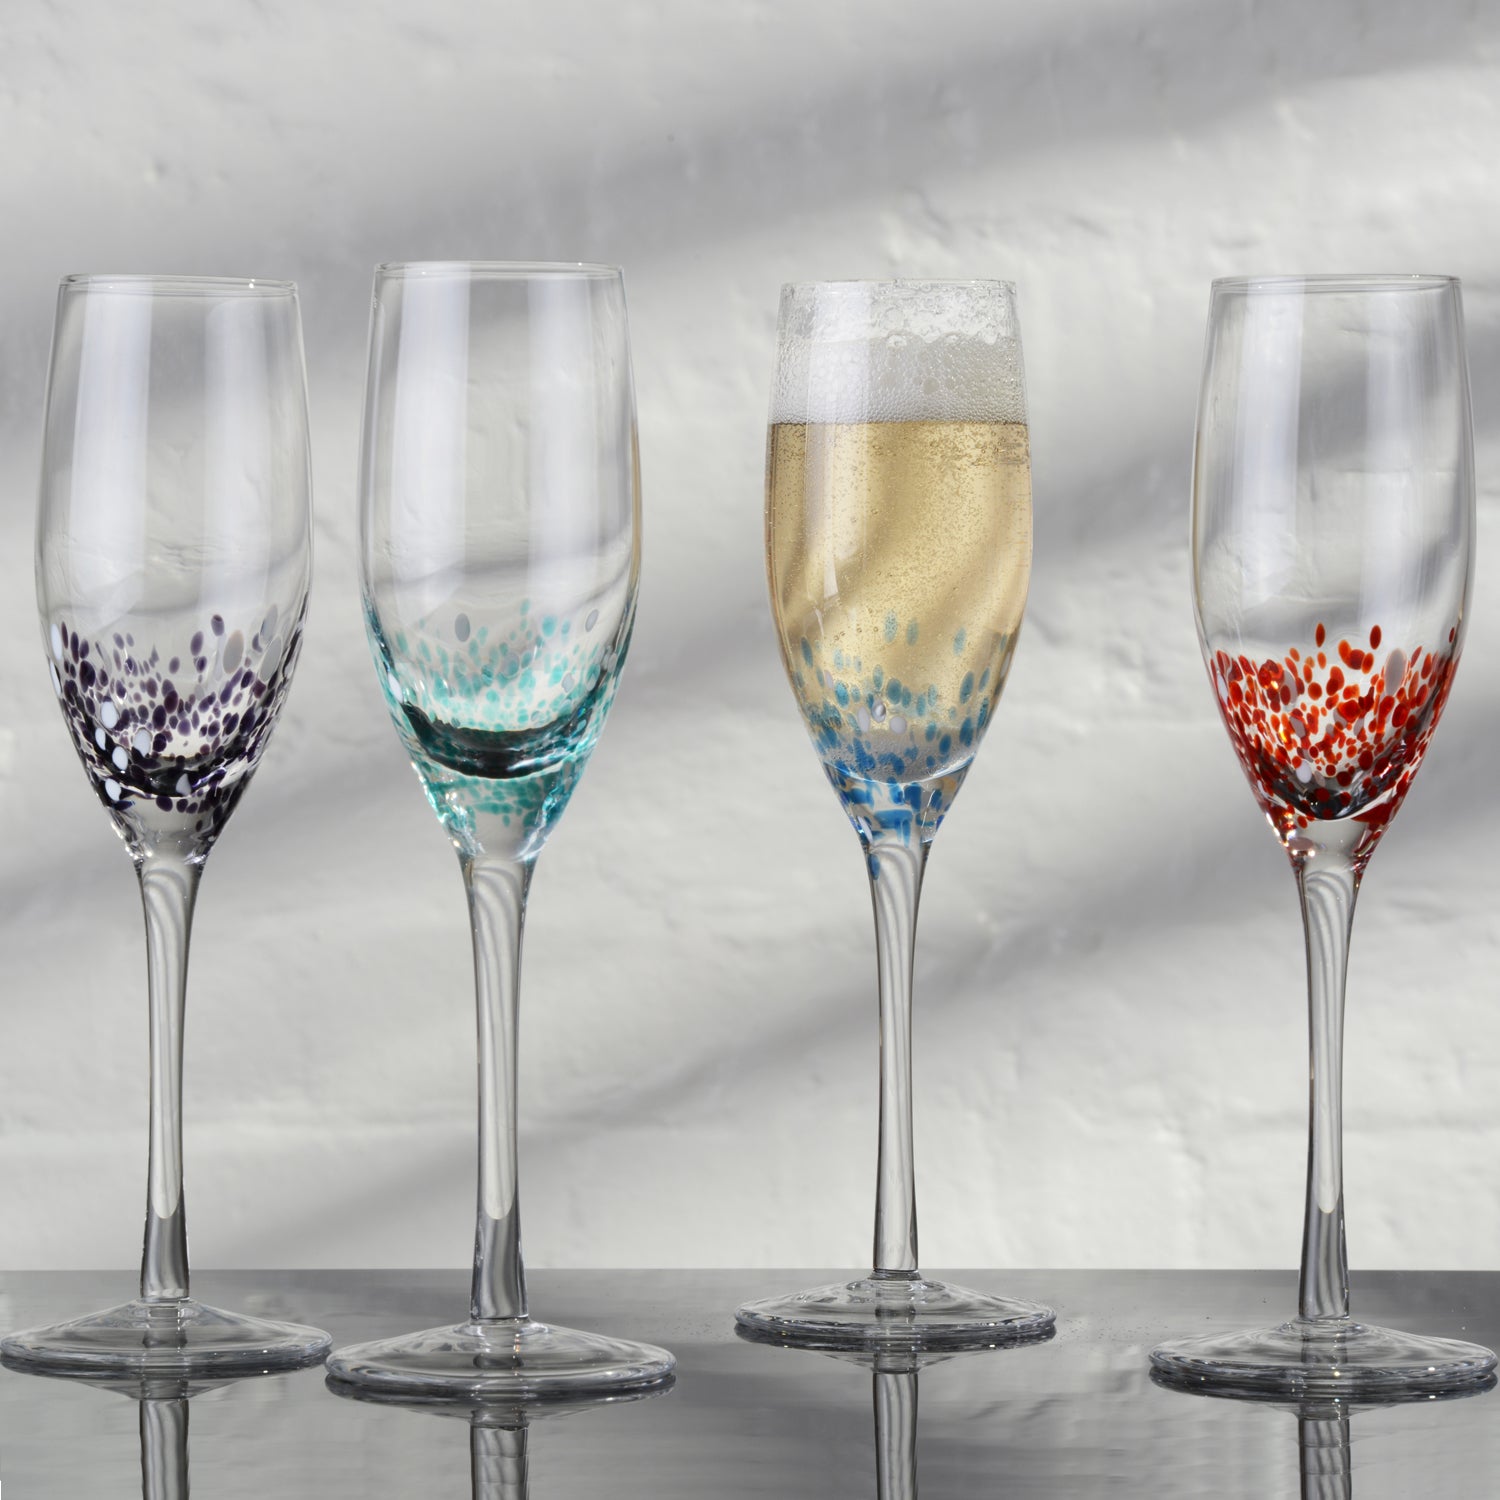 Anton Studio Designs Speckle Champagne Flutes, Set of 4